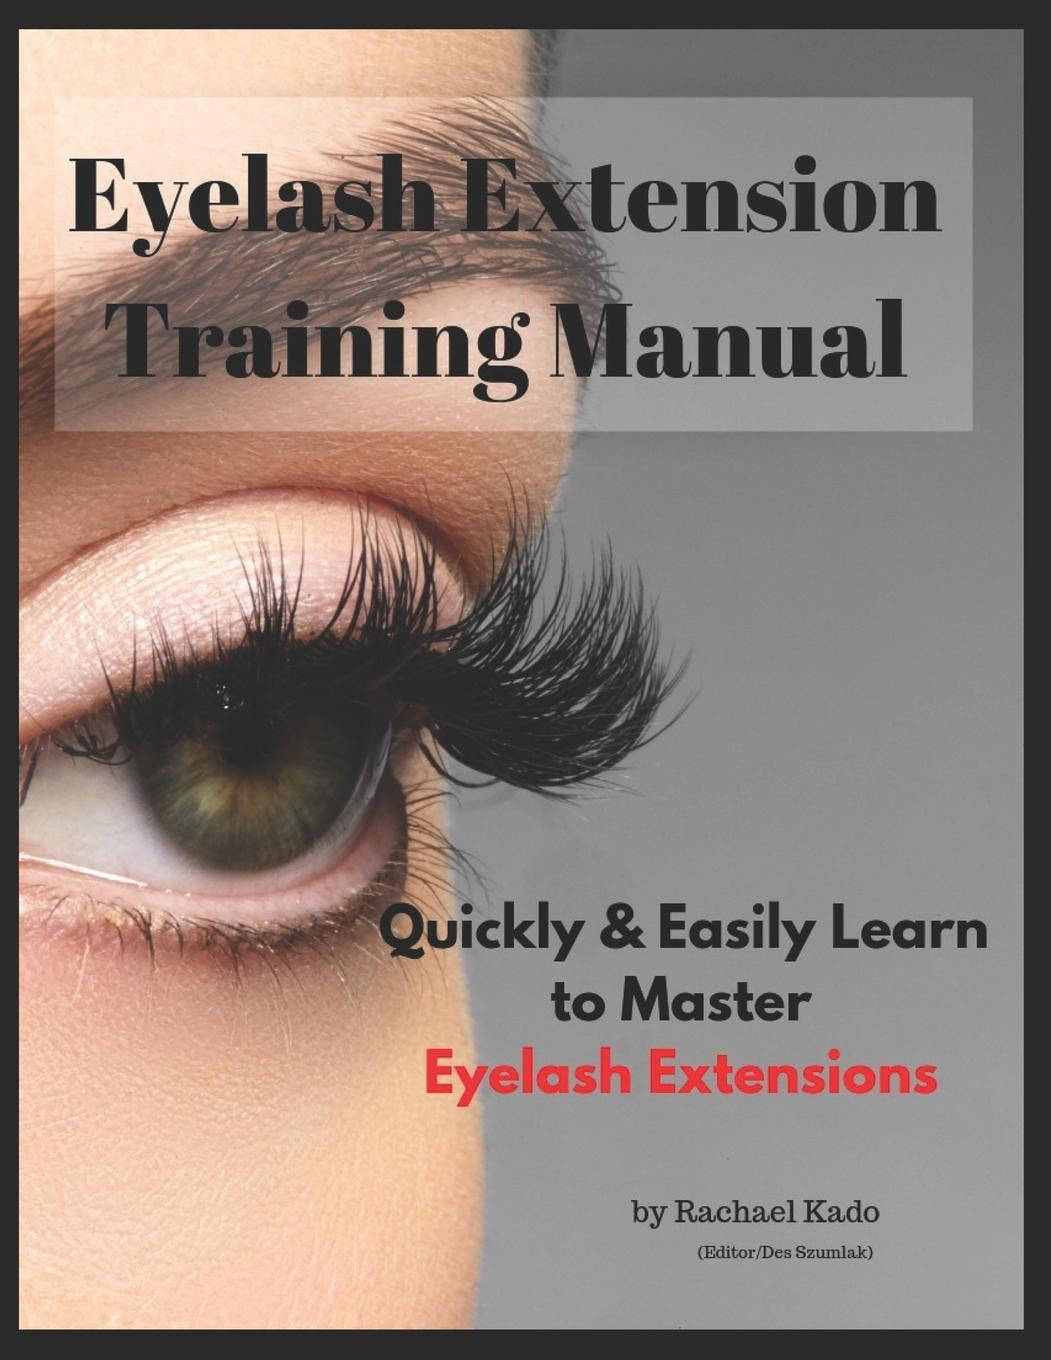 Eyelash Extension Training Manual (Paperback) - Walmart.com - Walmart.com